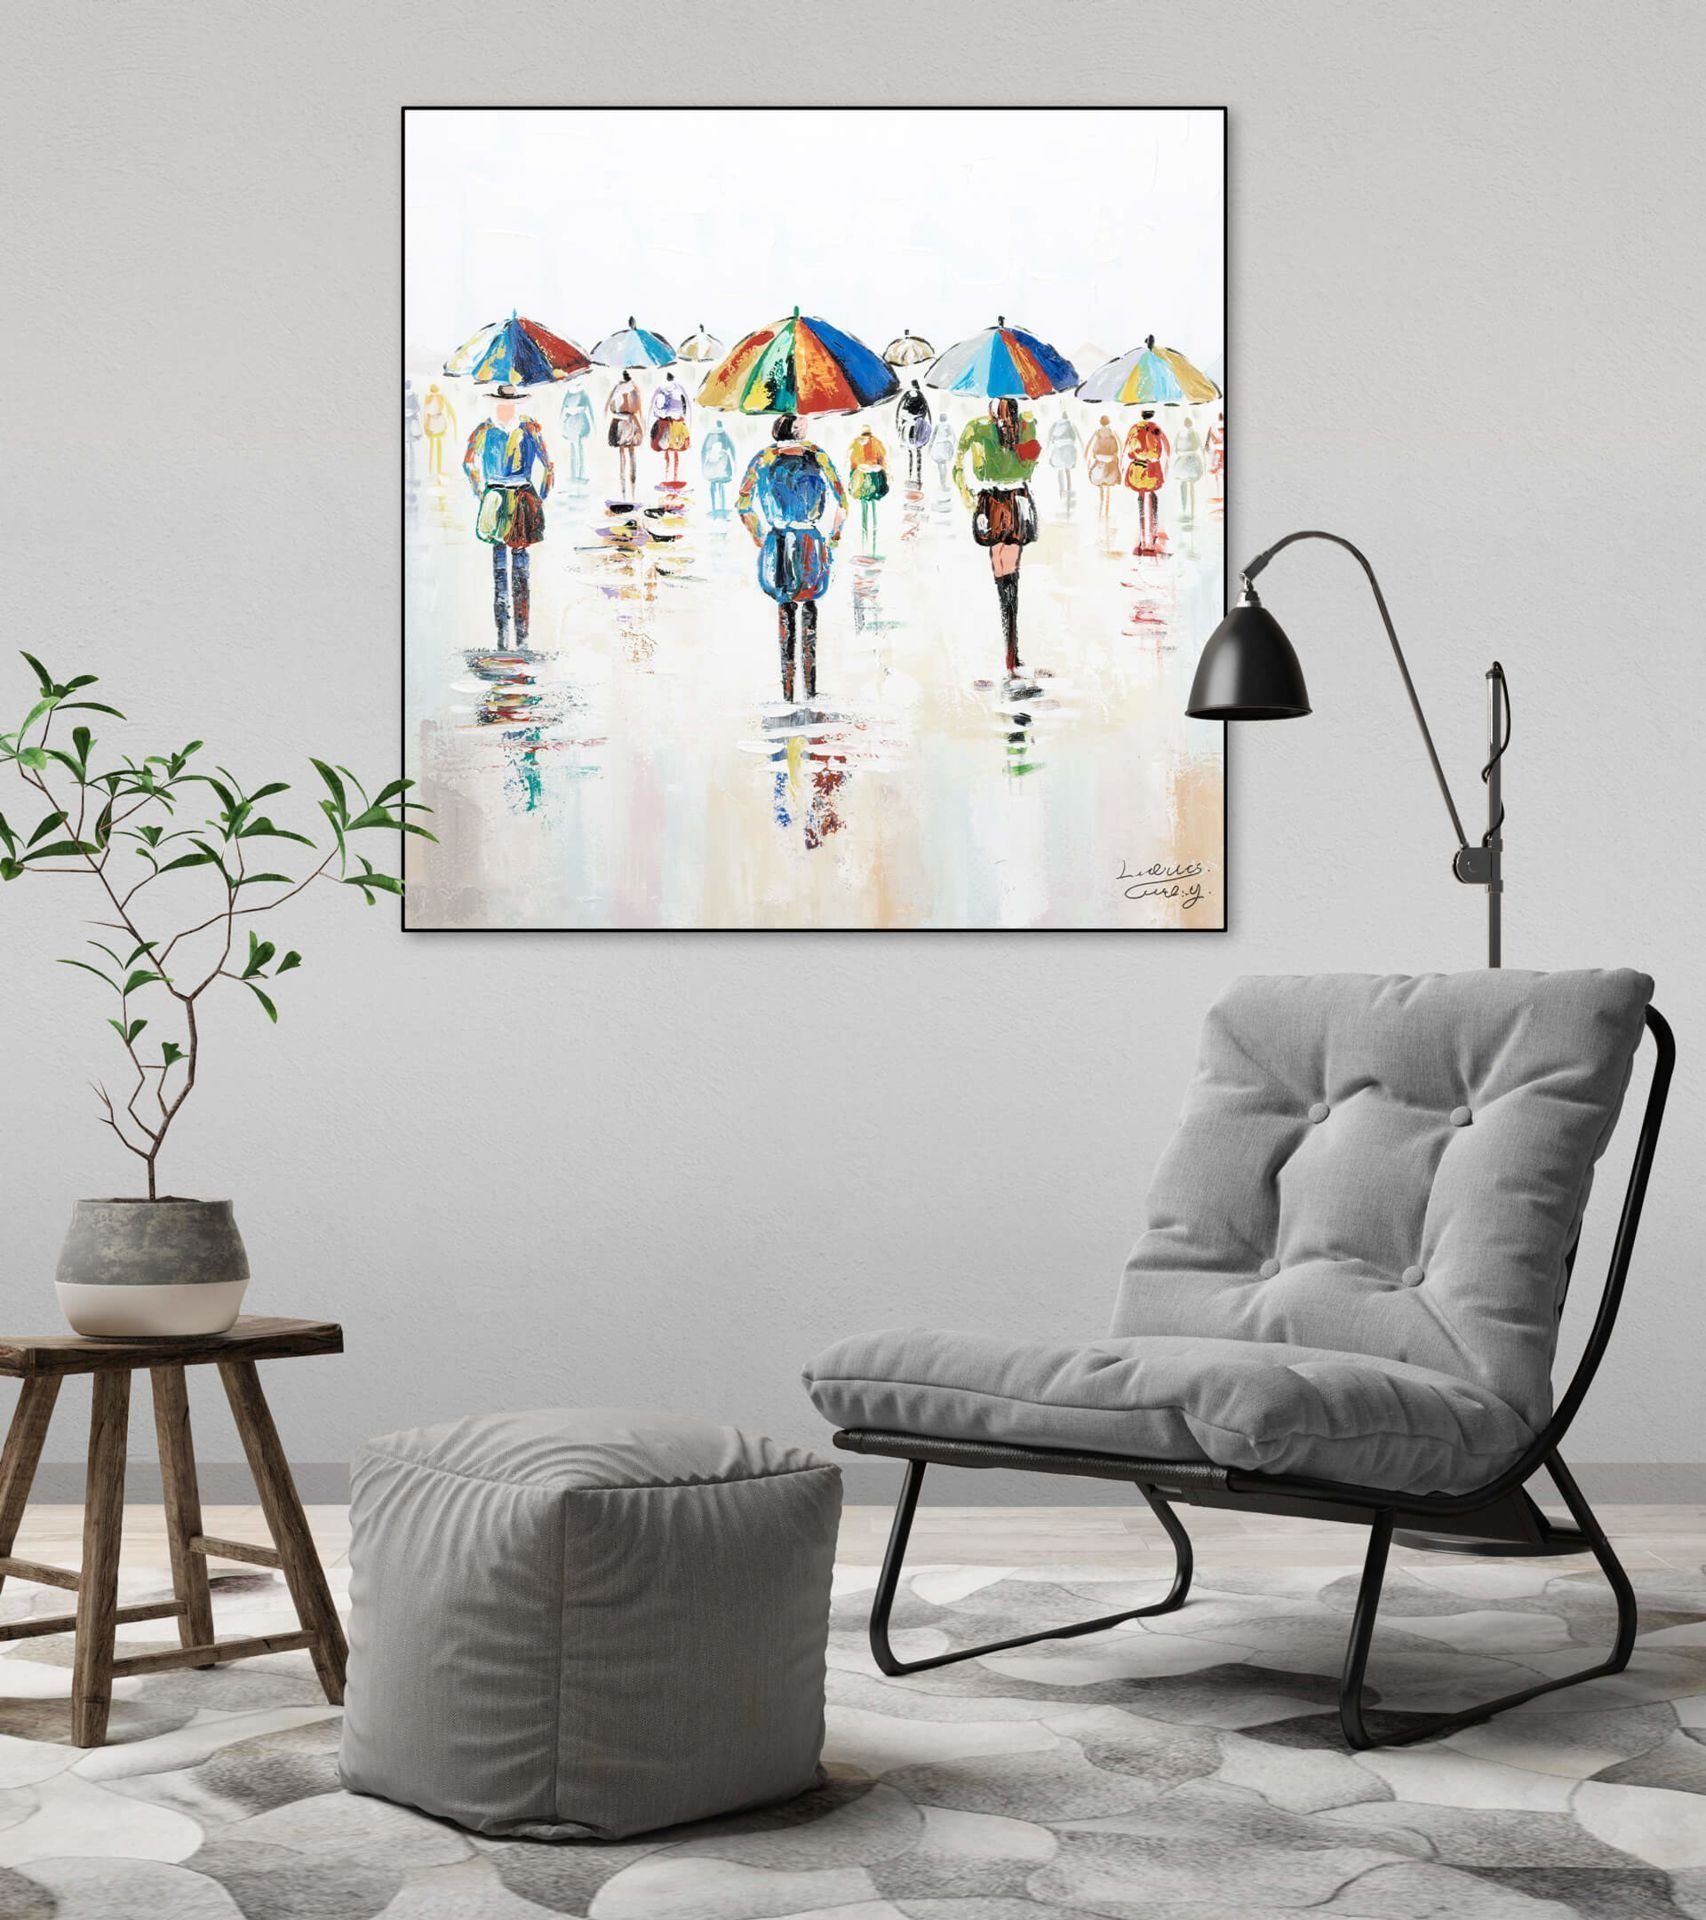 cm, 80x80 Süße Regengüsse KUNSTLOFT 100% Wohnzimmer HANDGEMALT Gemälde Wandbild Leinwandbild